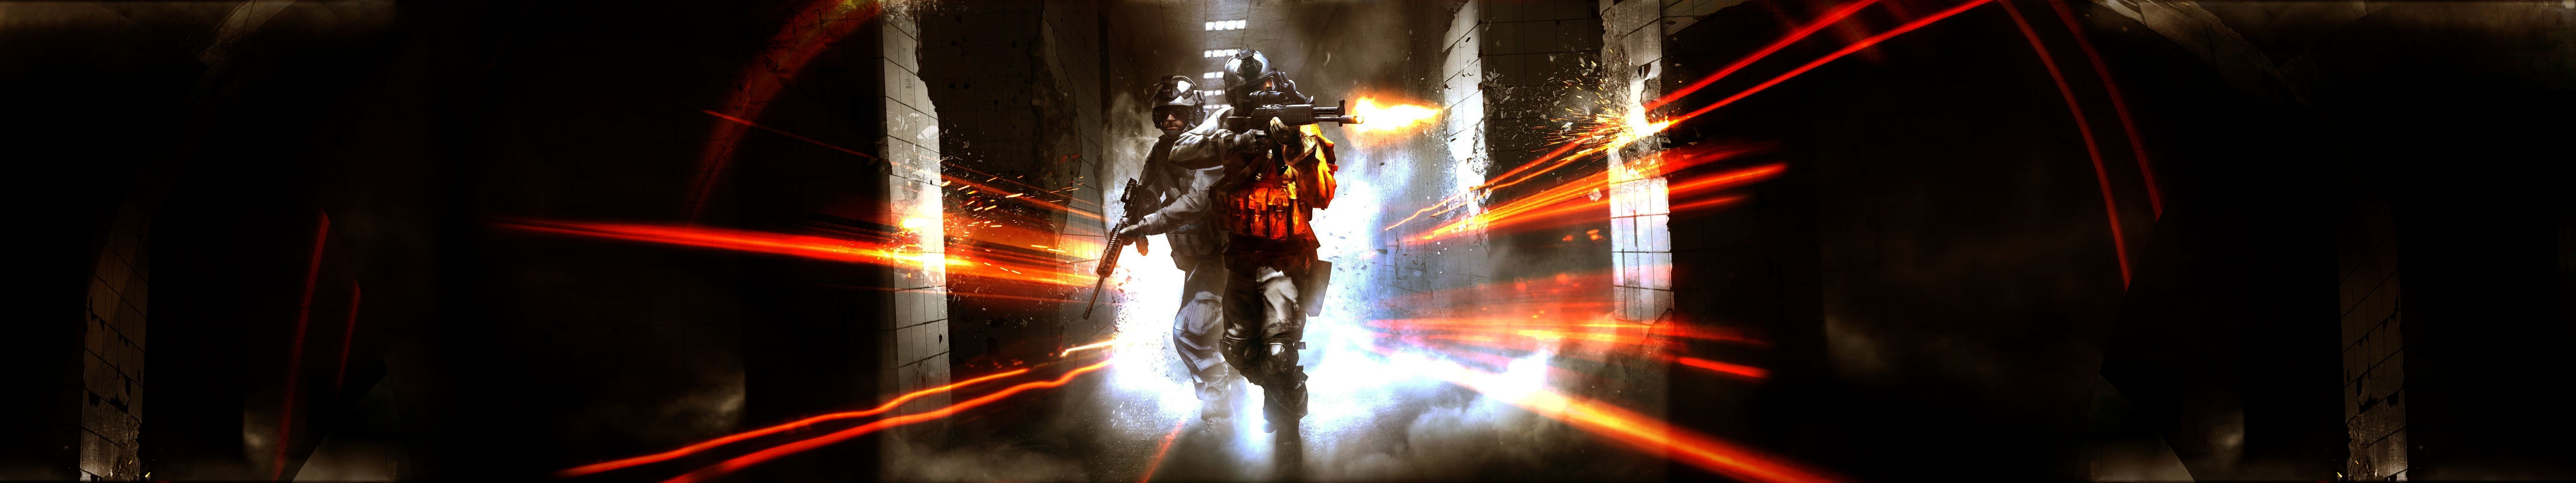 General 7680x1440 Battlefield (game) Battlefield 4 video game art video games PC gaming